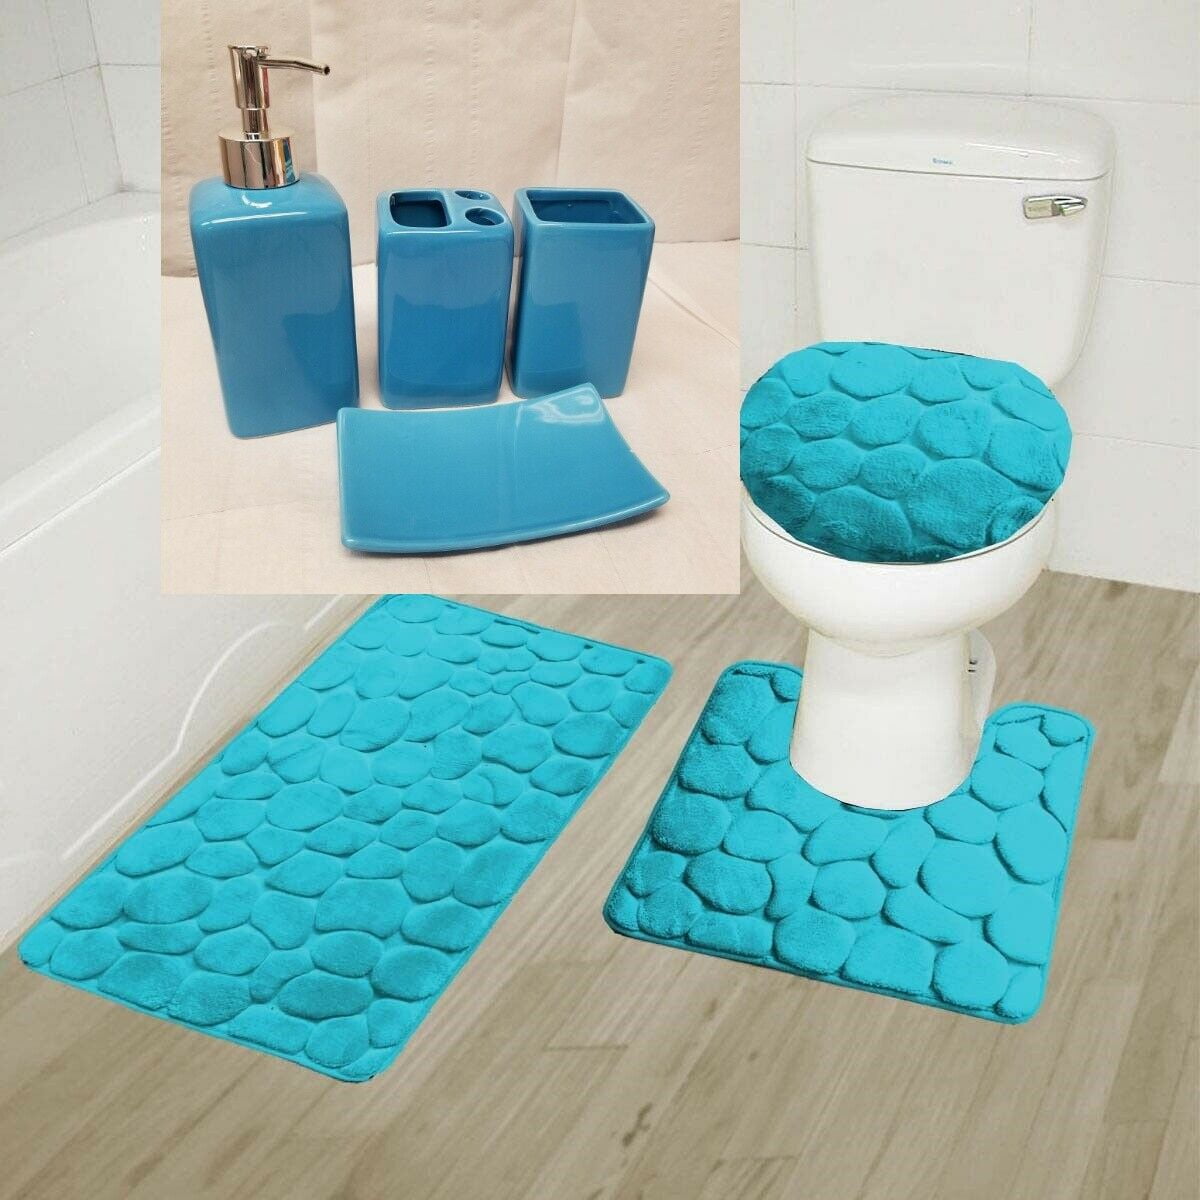 2pcs/set Non Slip Pebbles Bath Mat Covers Pedestal Memory Foam Soft Toilet Rugs 